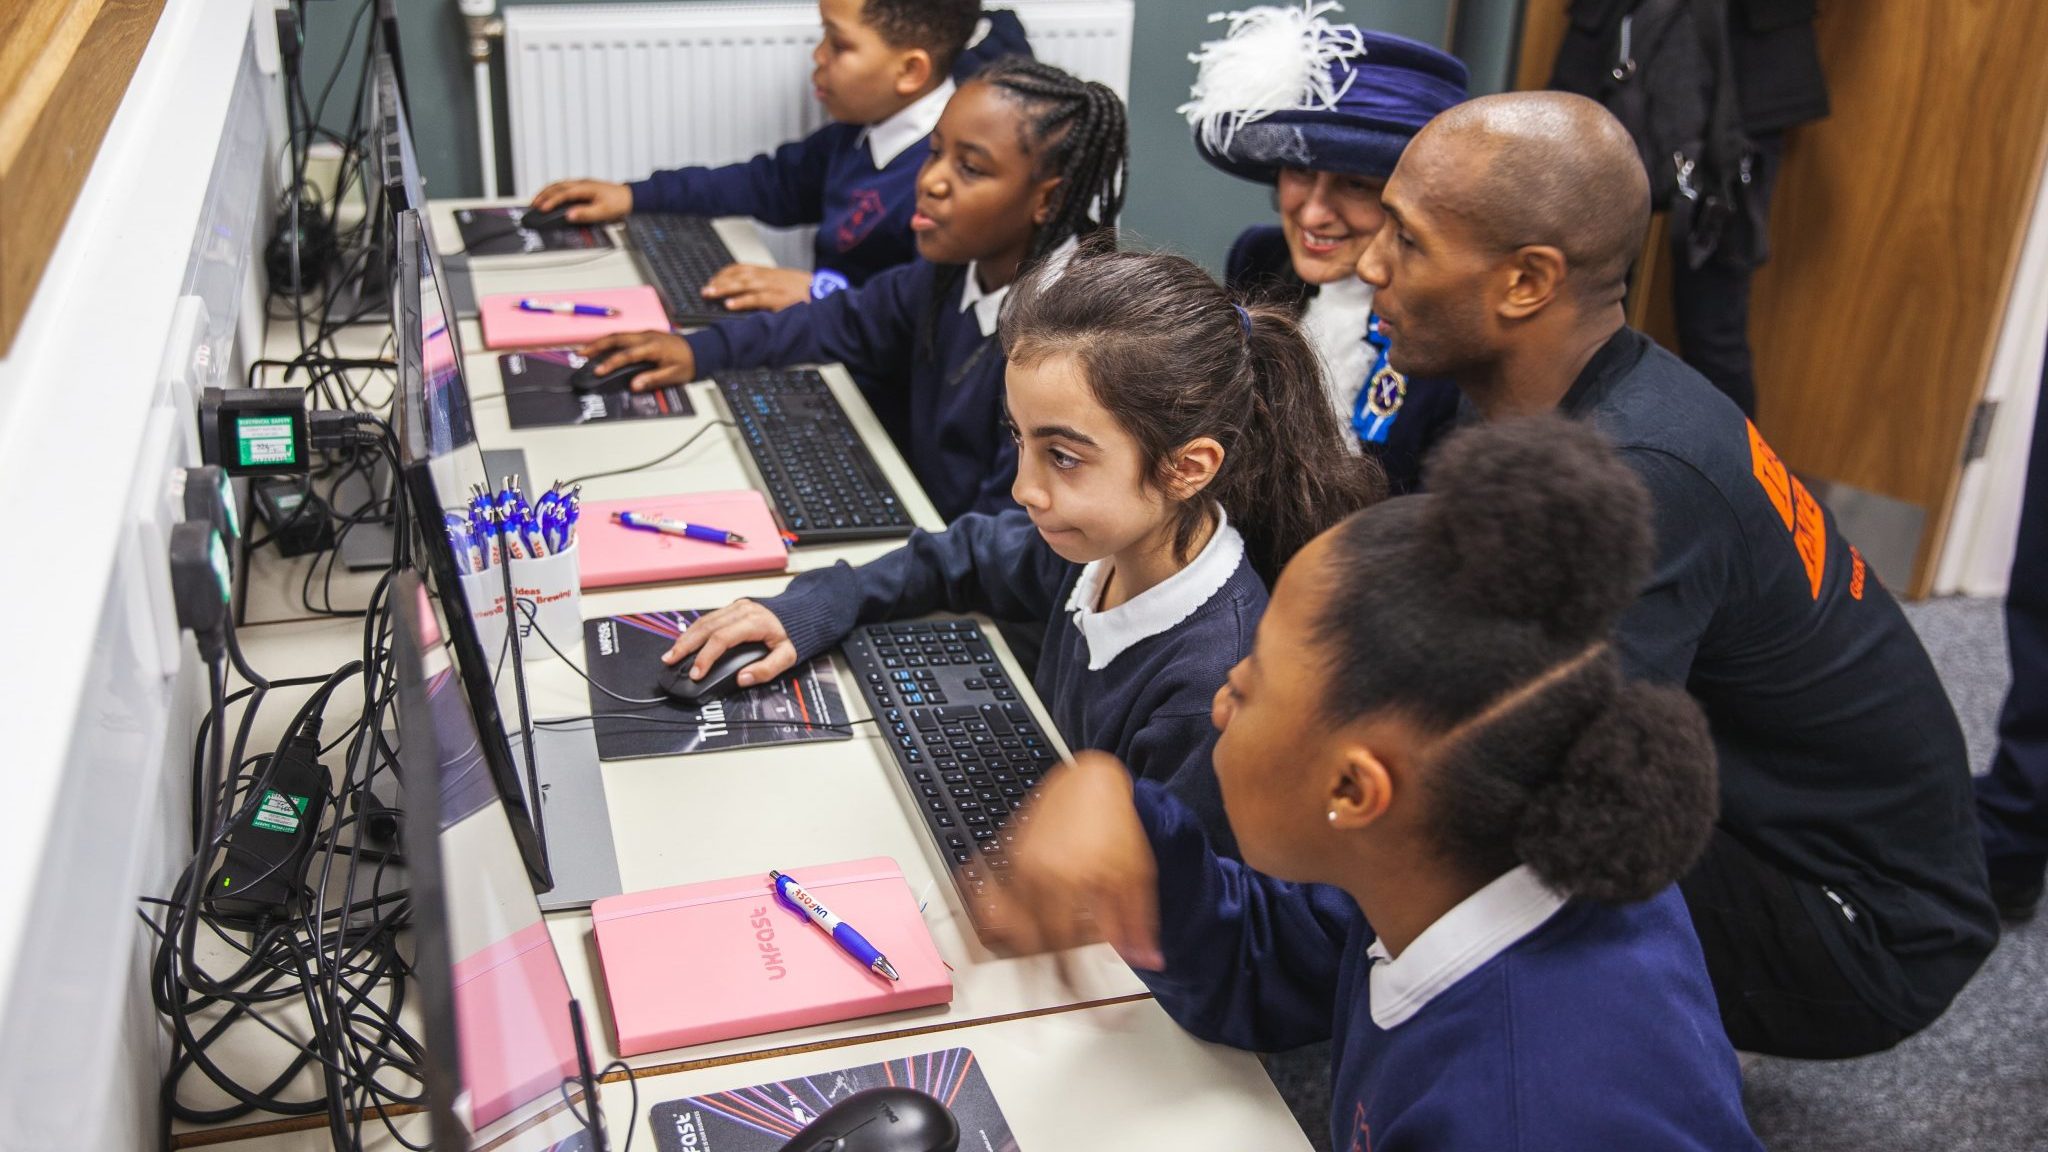 UKFast's Aaron Saxton with school children using Rasberry Pi's